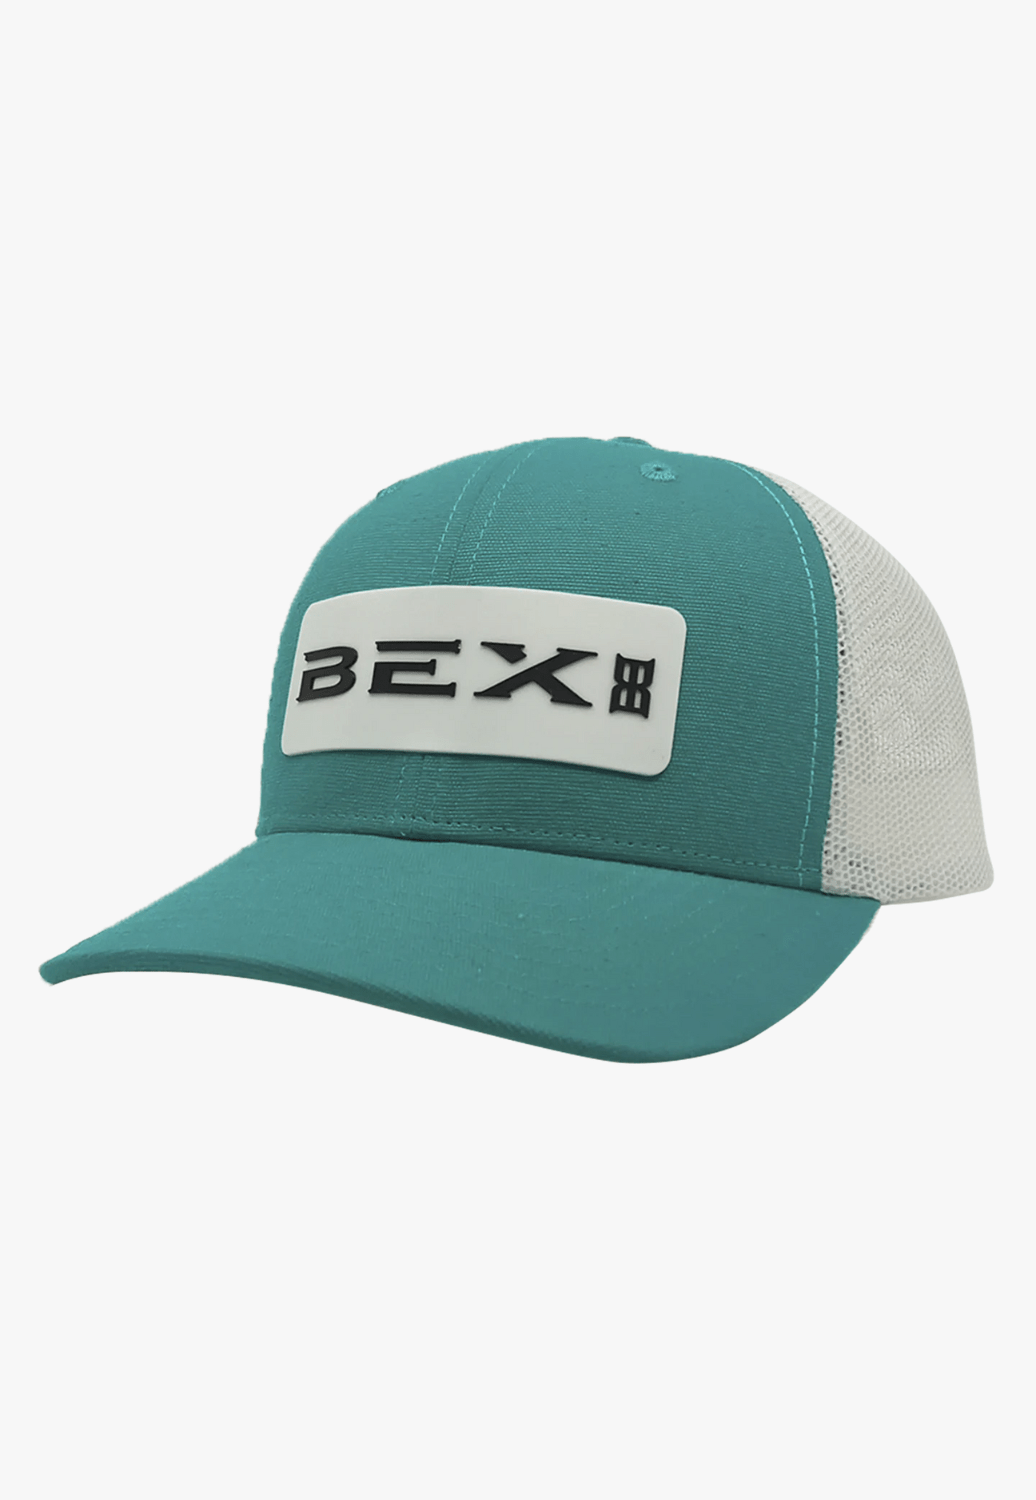 BEX HATS - Caps Teal/White Bex Marshall Cap